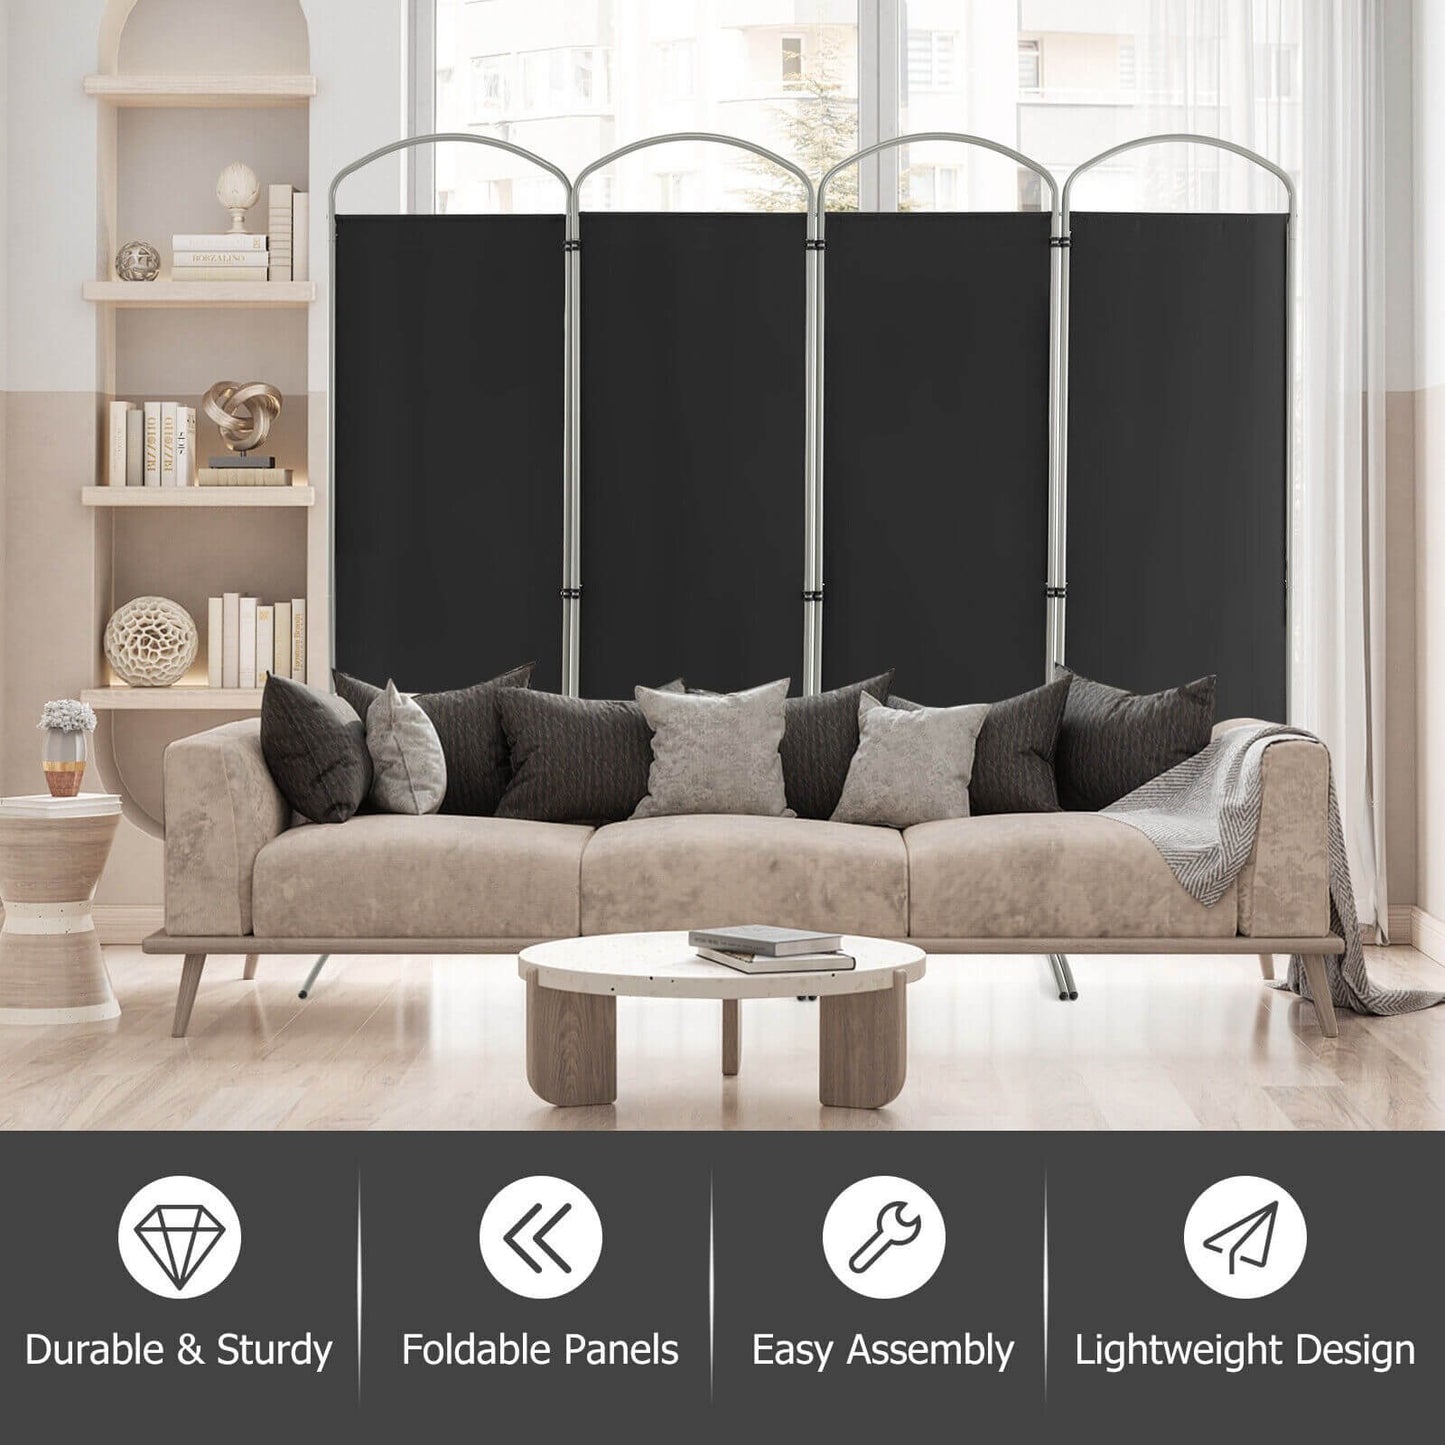 6.2Ft Folding 4-Panel Room Divider for Home Office Living Room, Black